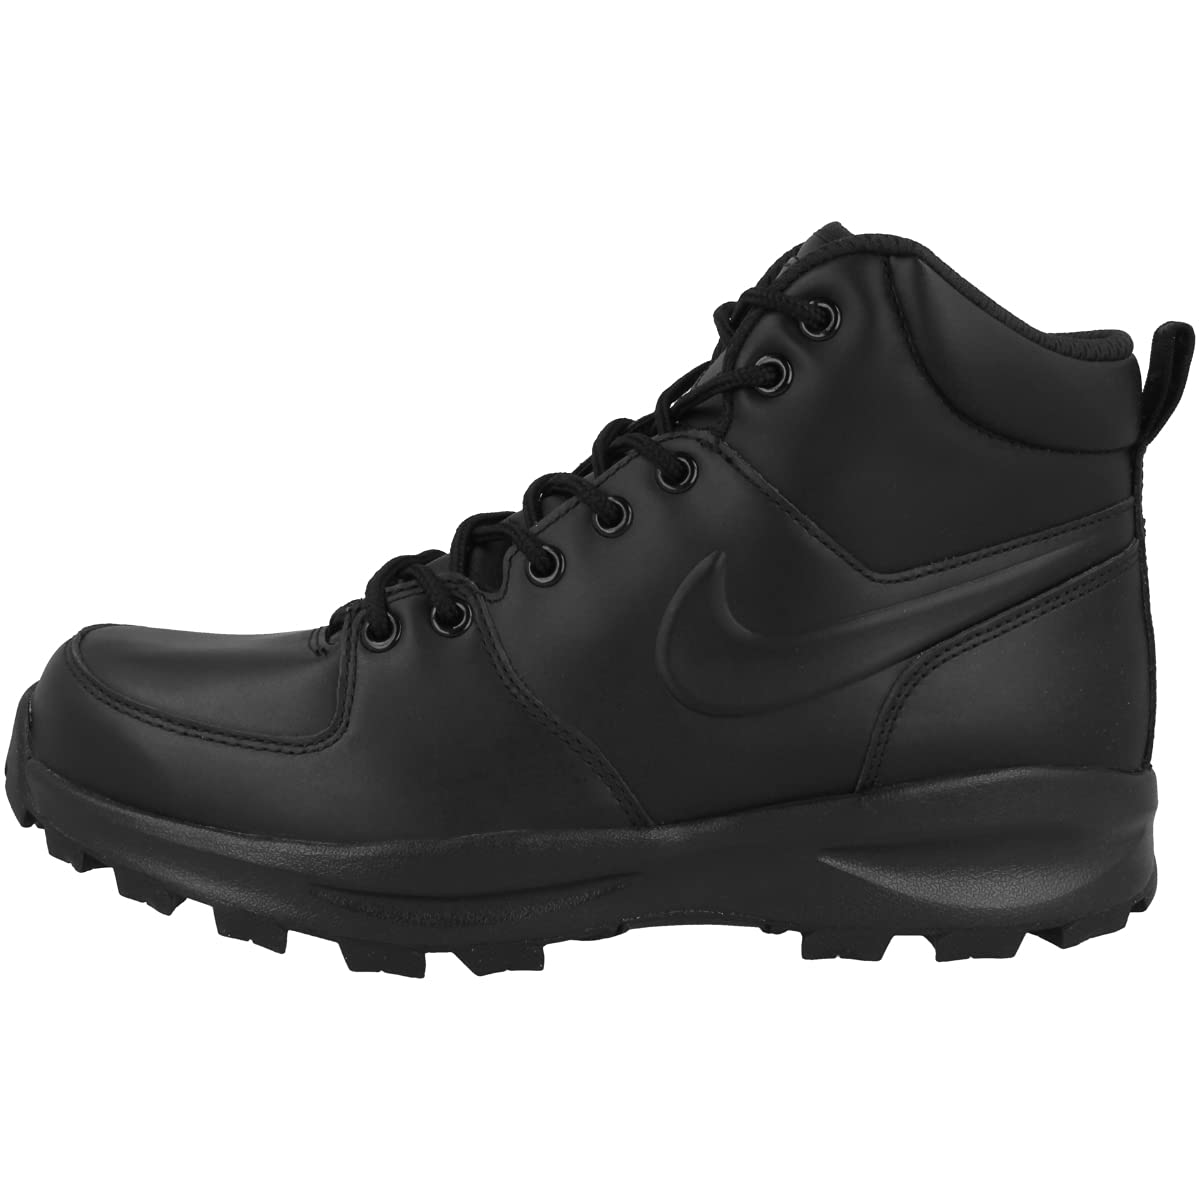 Buy Nike Men's Manoa Leather Hiking Boot | Fado168